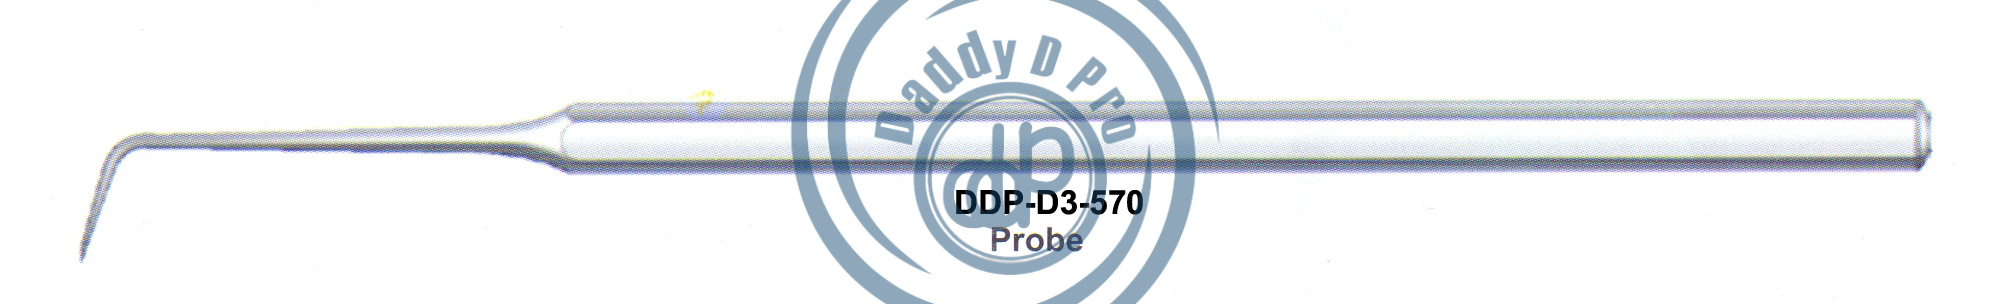 images/DDP-D3-570.png